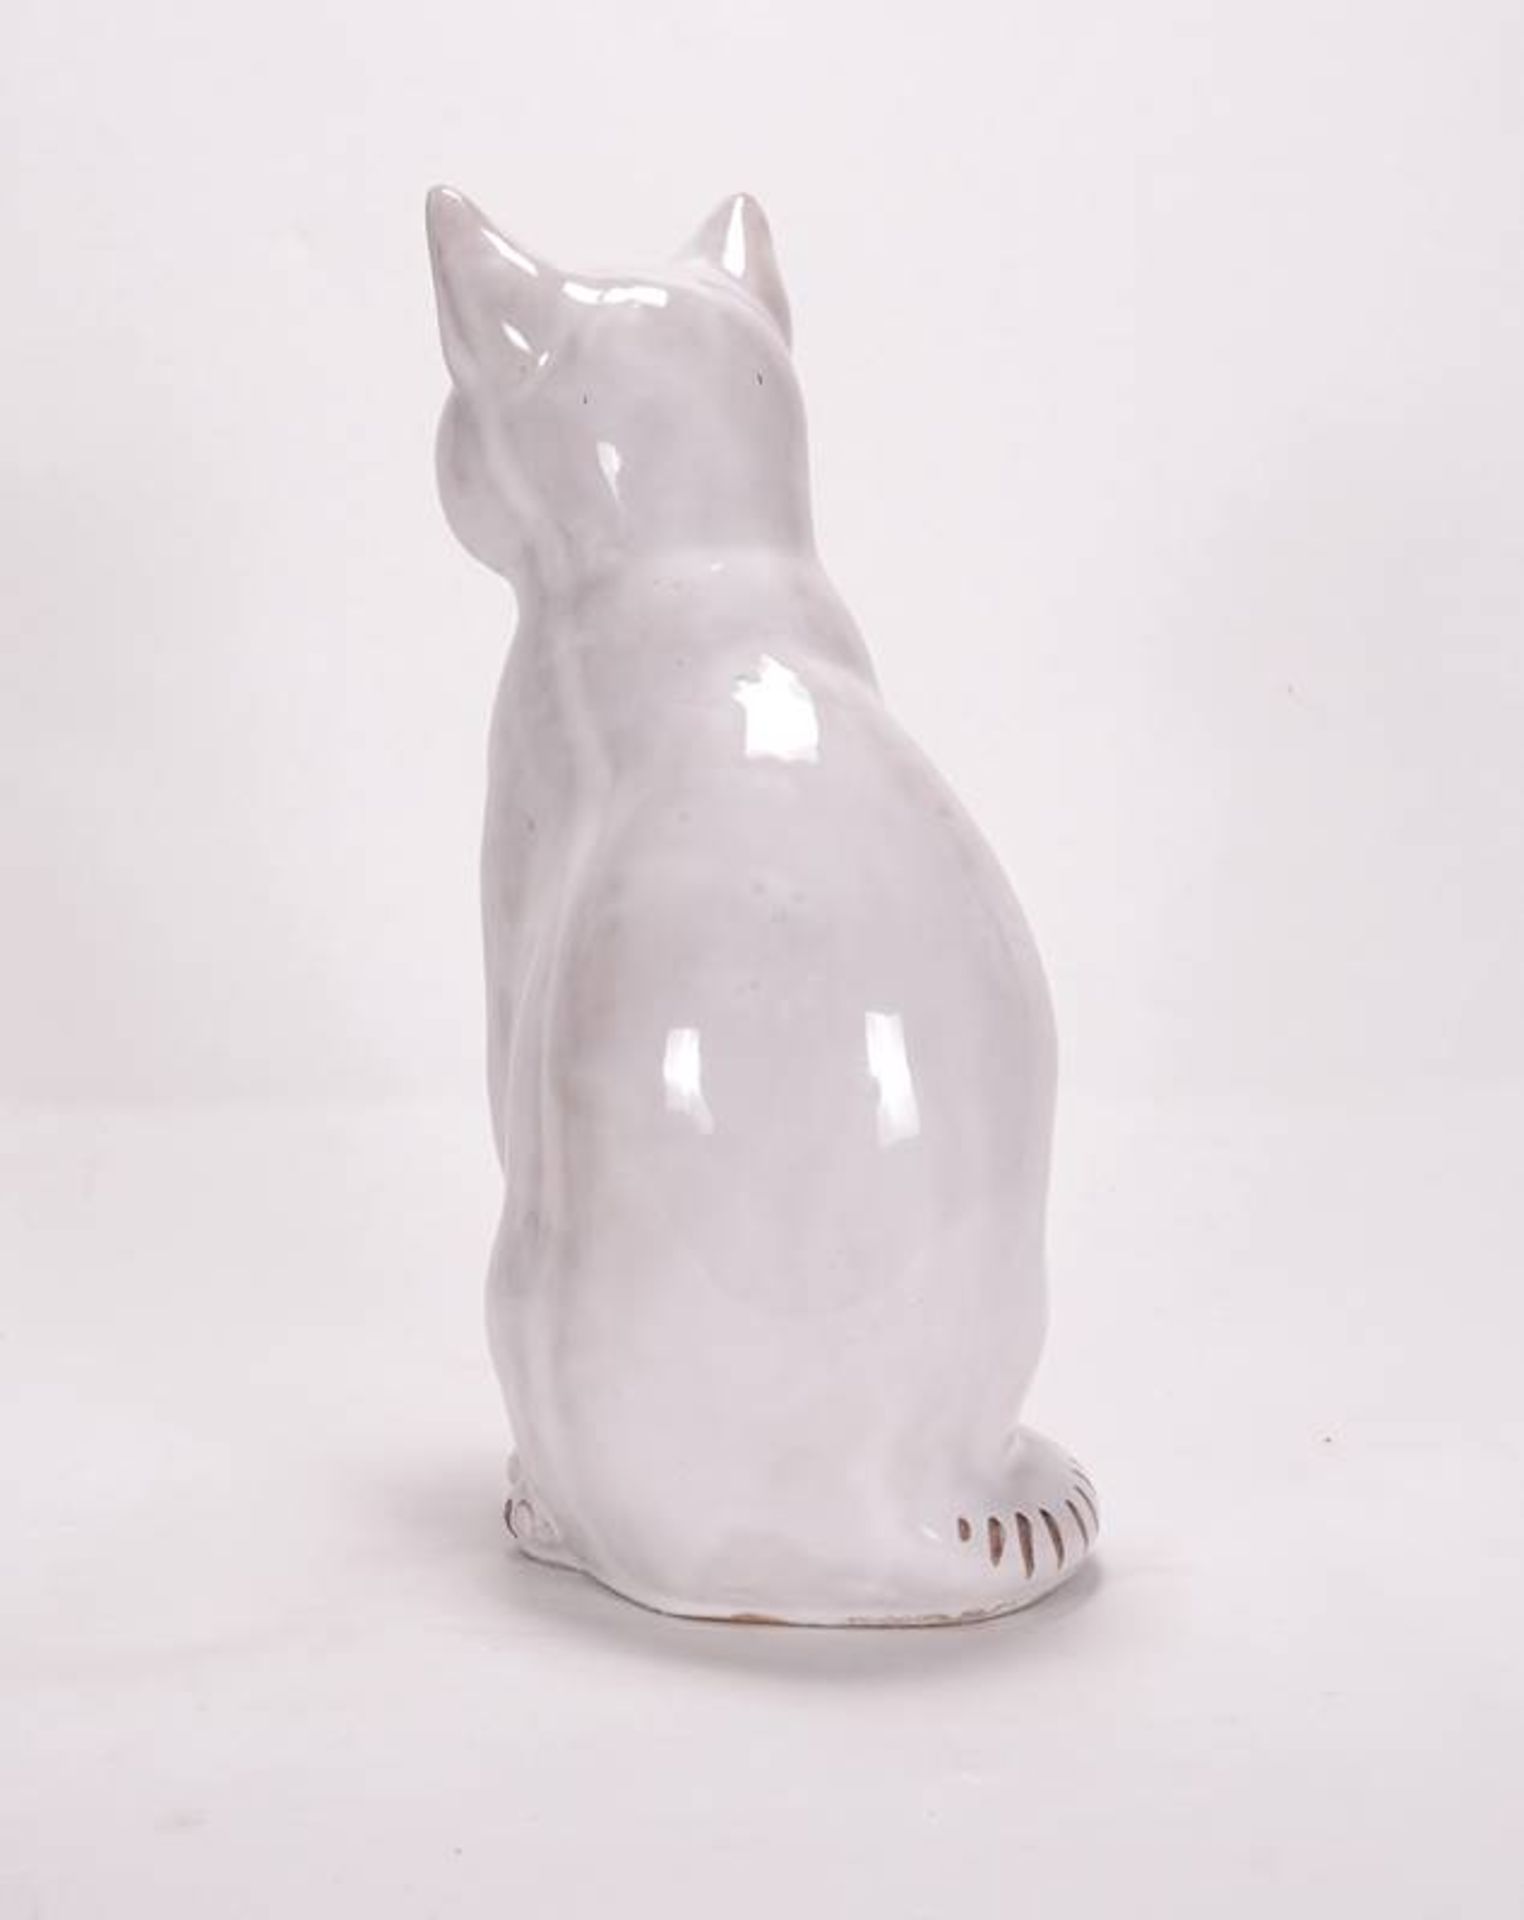 White cat - Image 2 of 5